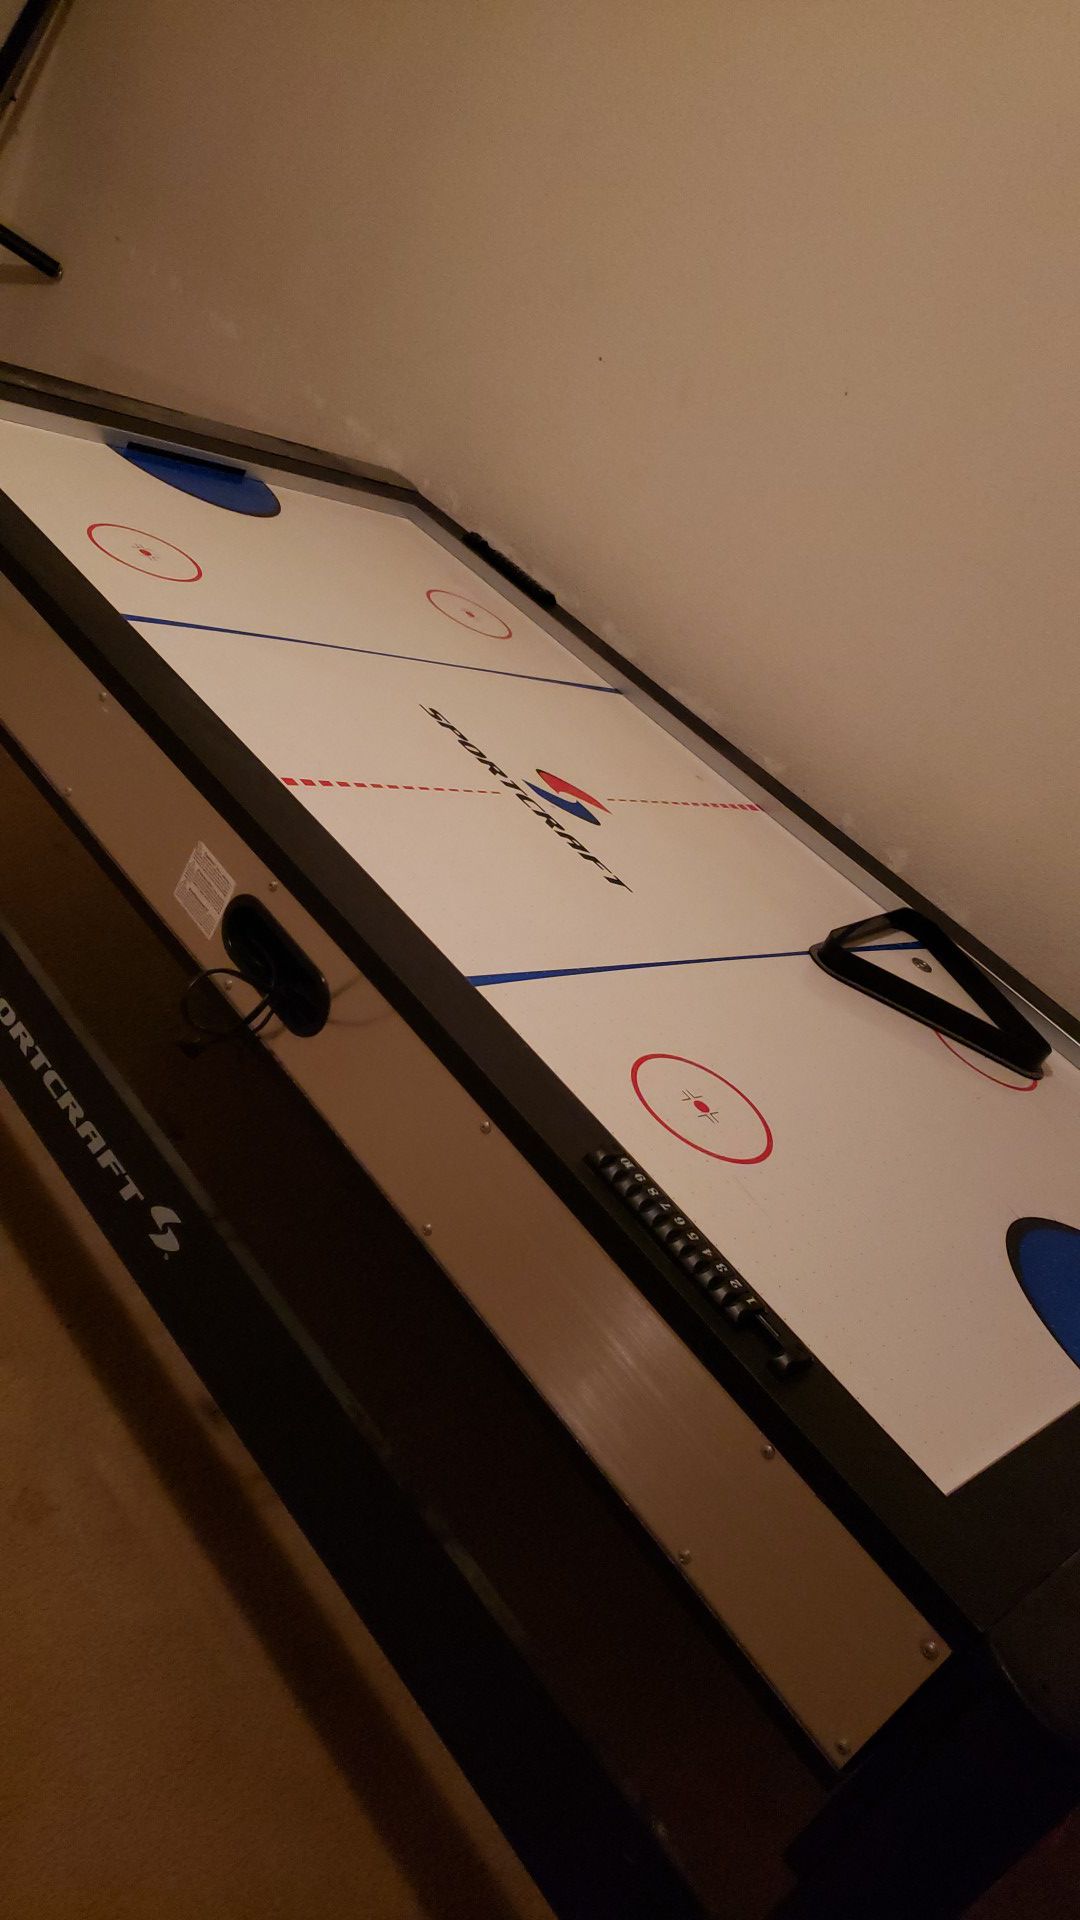 Pool/air hockey table